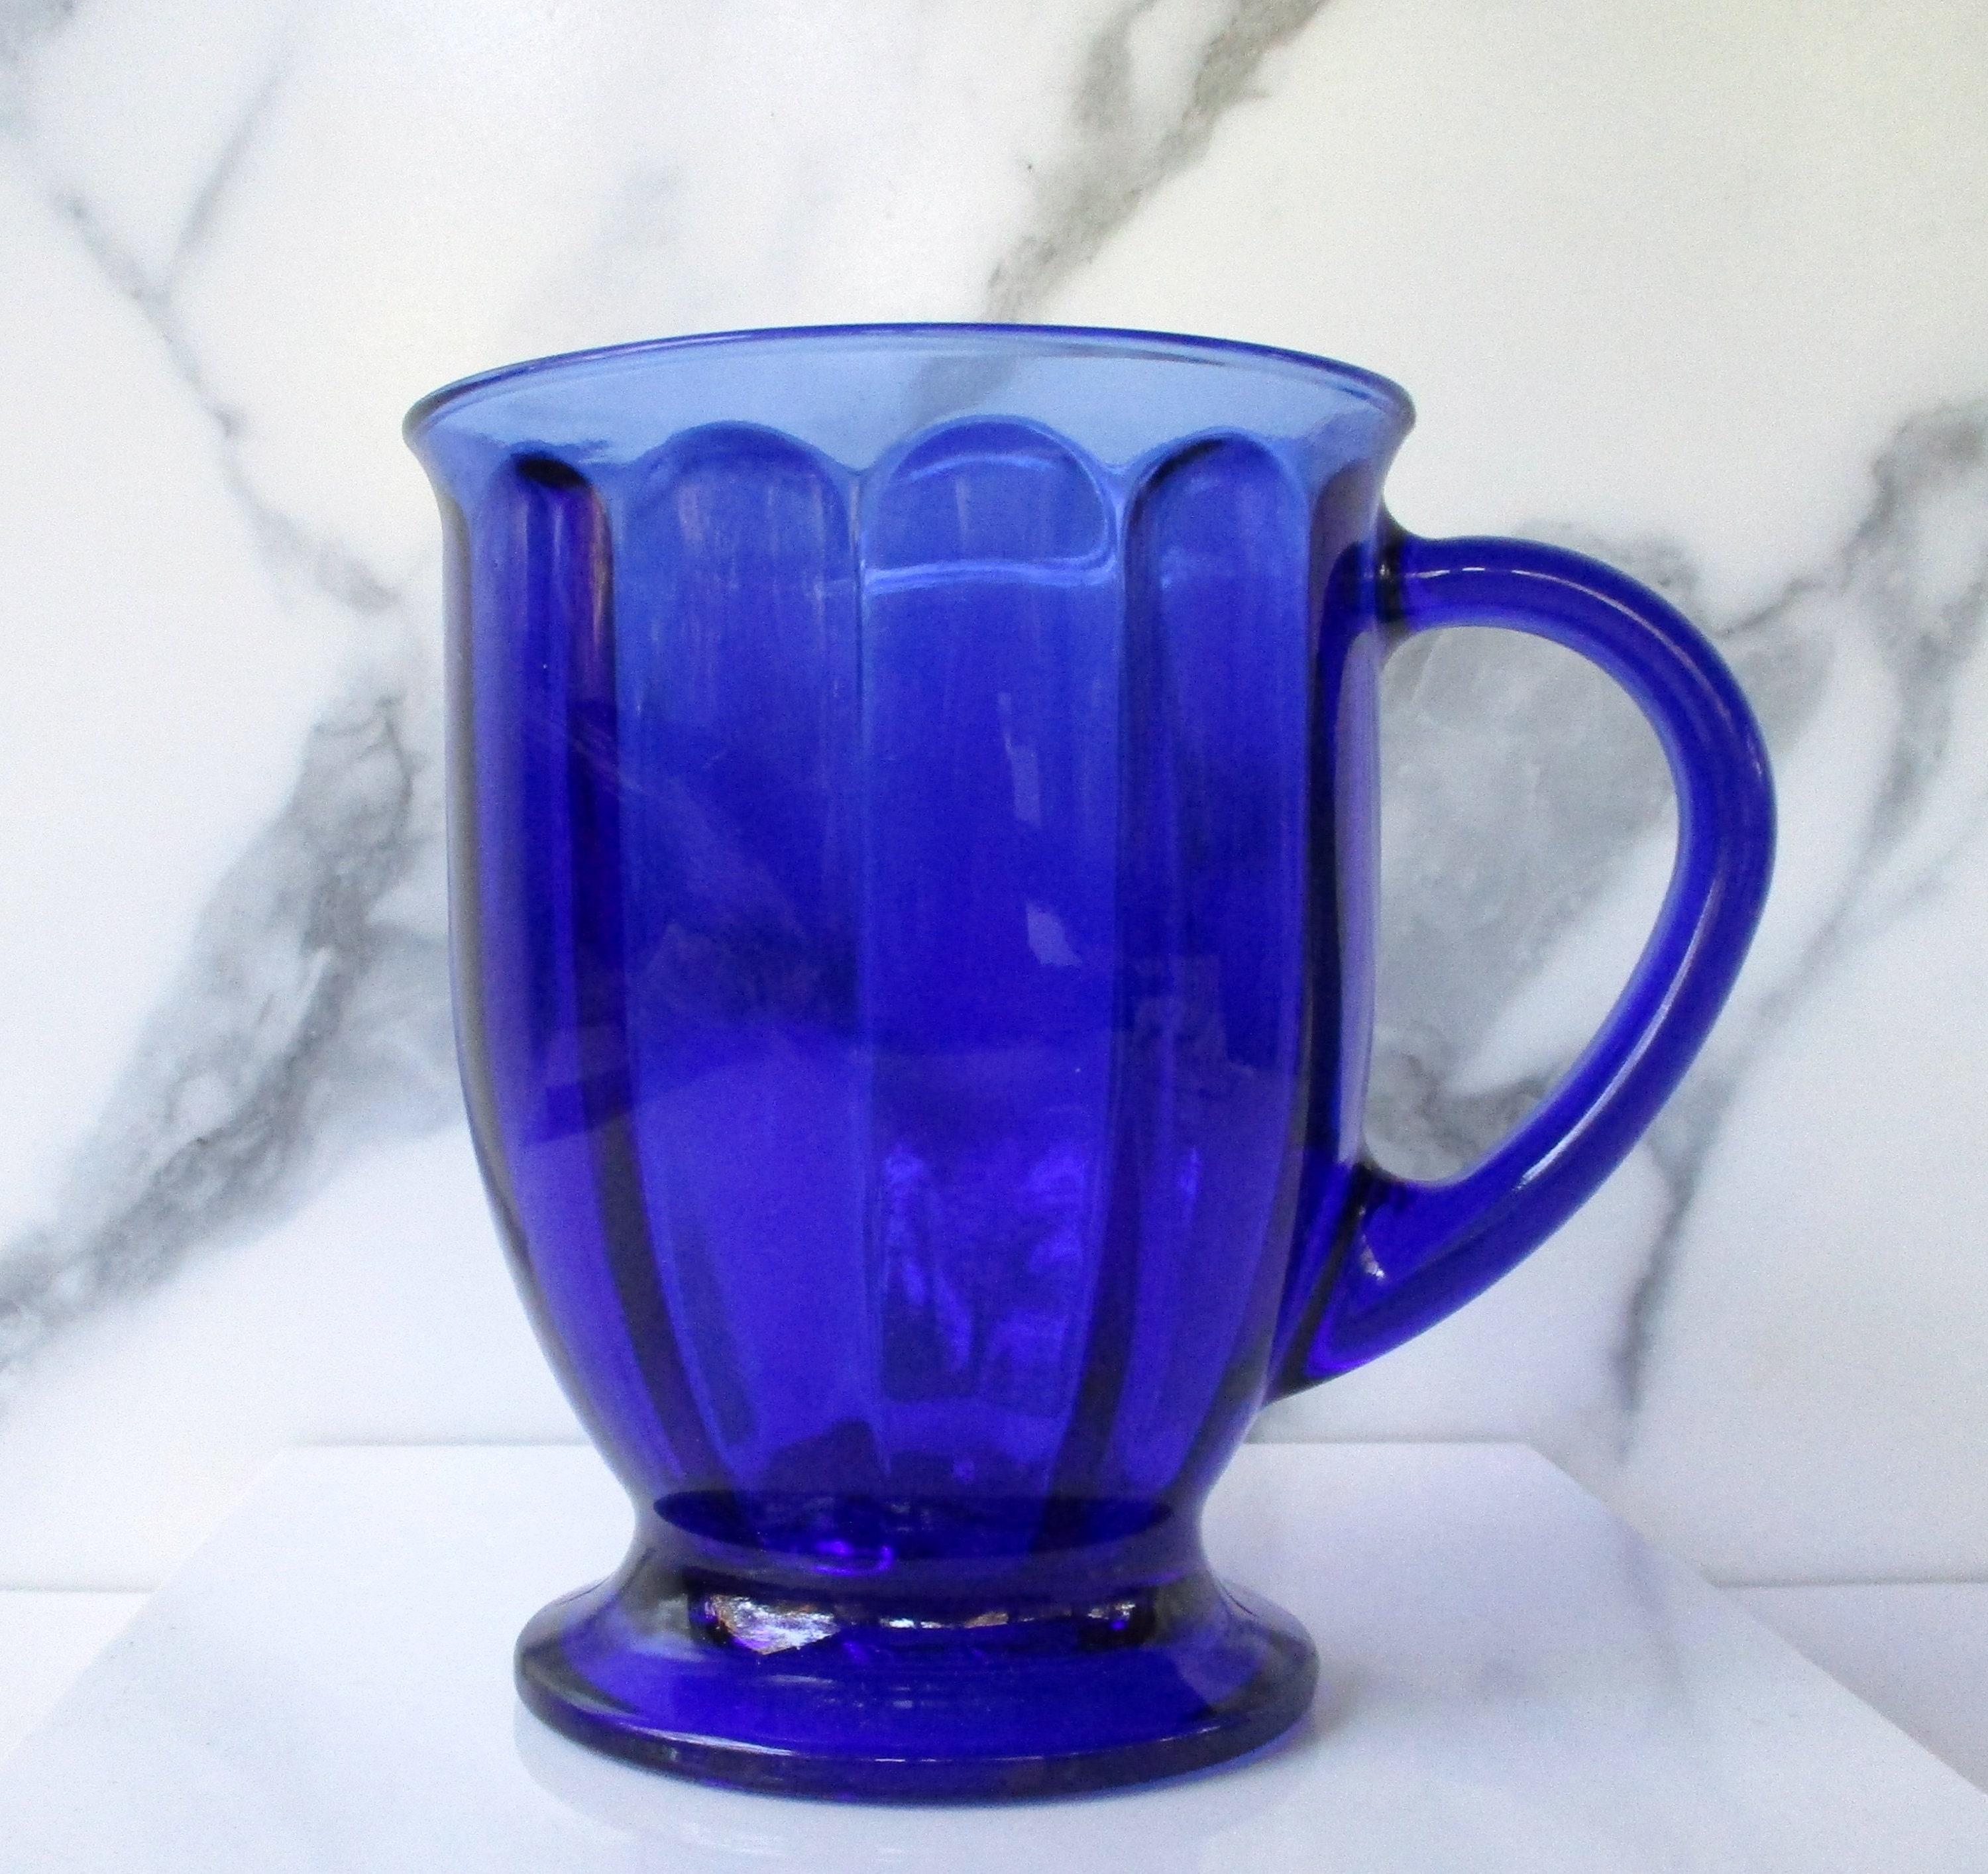 Self Contained Glass Mug Washer - Blue Oval